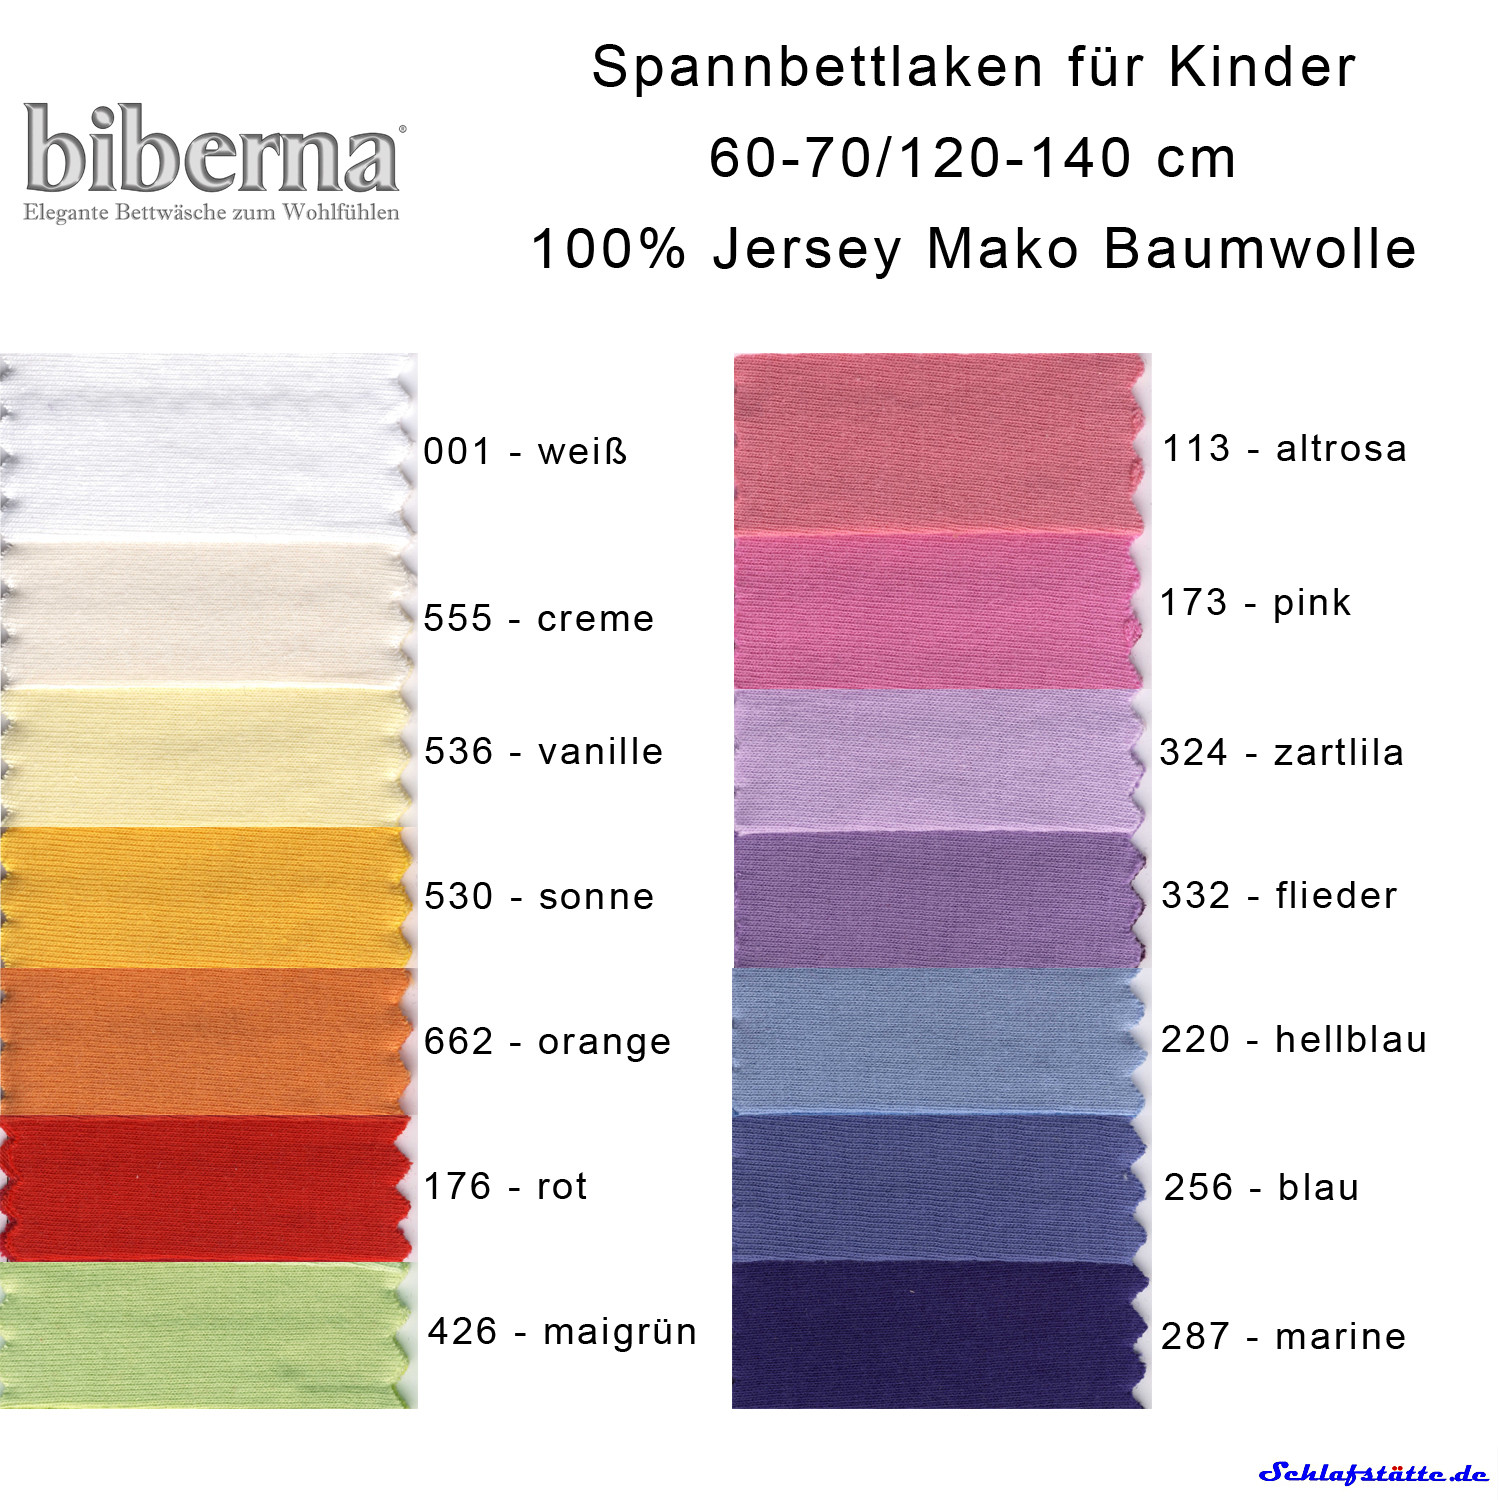 Biberna Kinder Baby Spannbettlaken Jersey 70x140 in 14 Farben